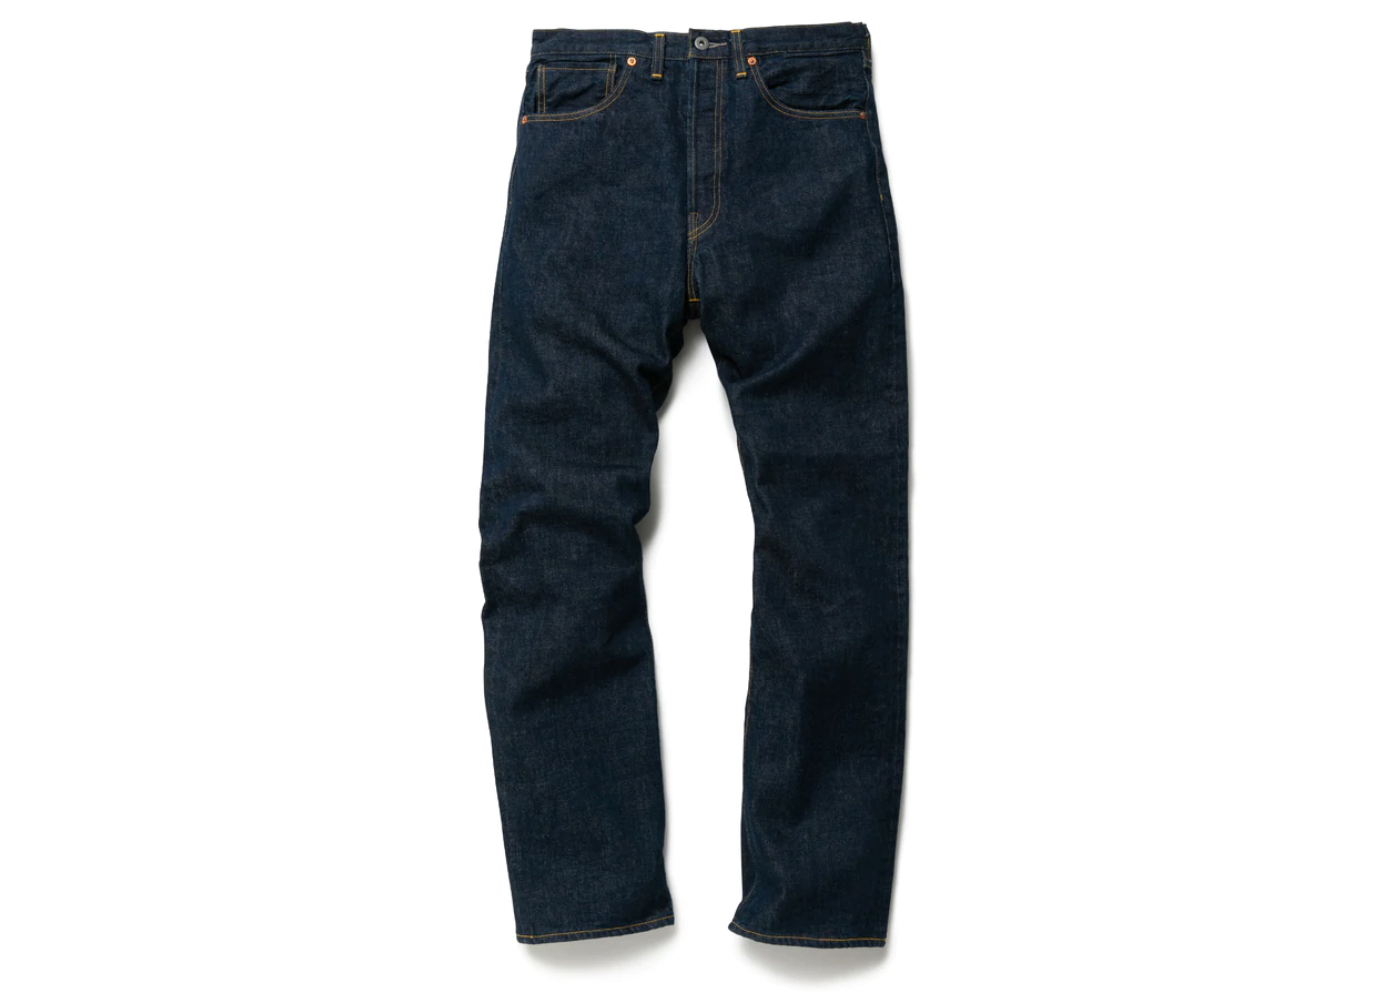 Levis Homer Campbell Vintage Clothing 501 Jeans Plain Denim Men's